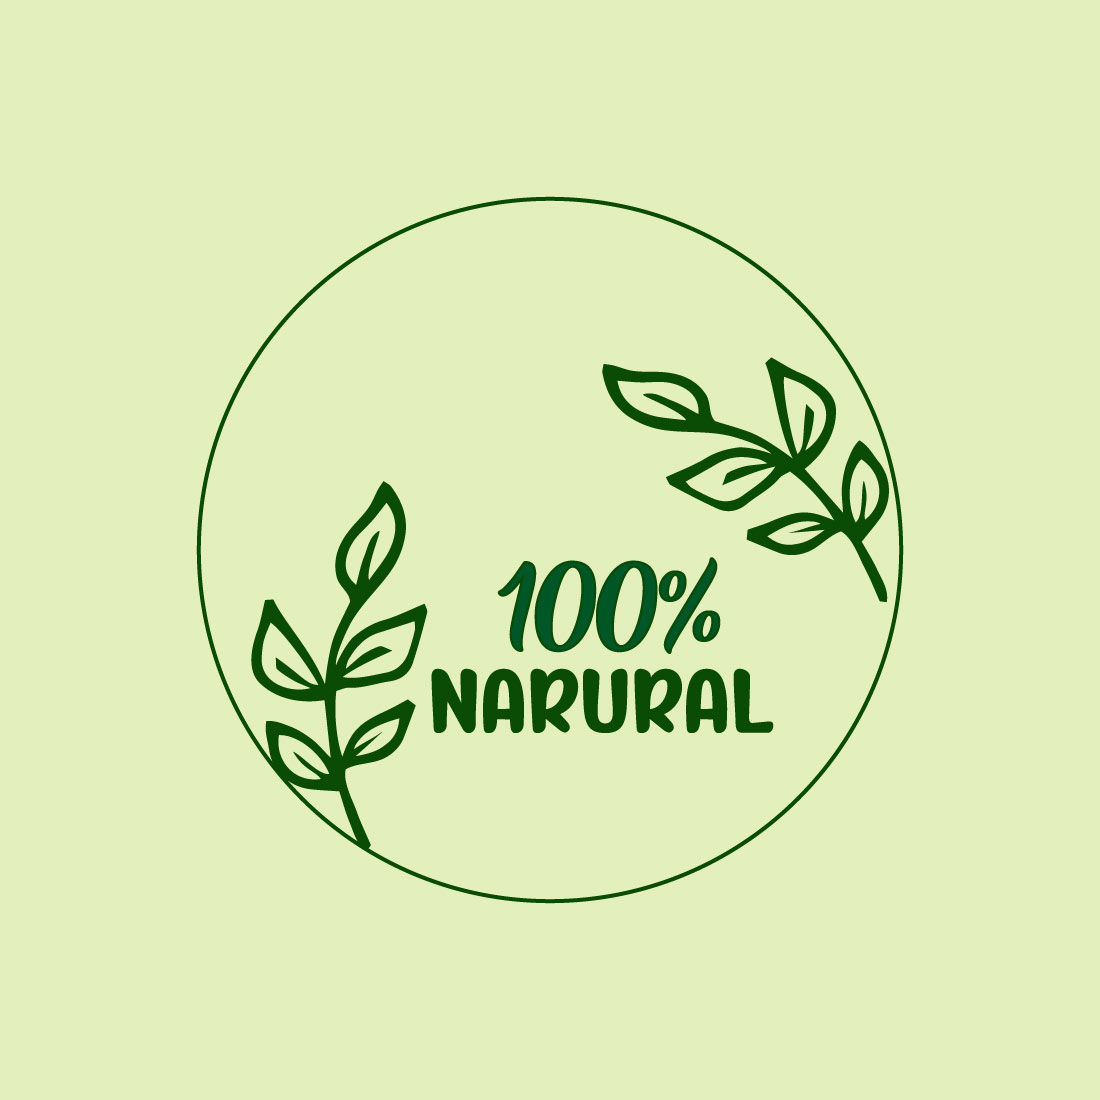 Free 100 natural logo cover image.